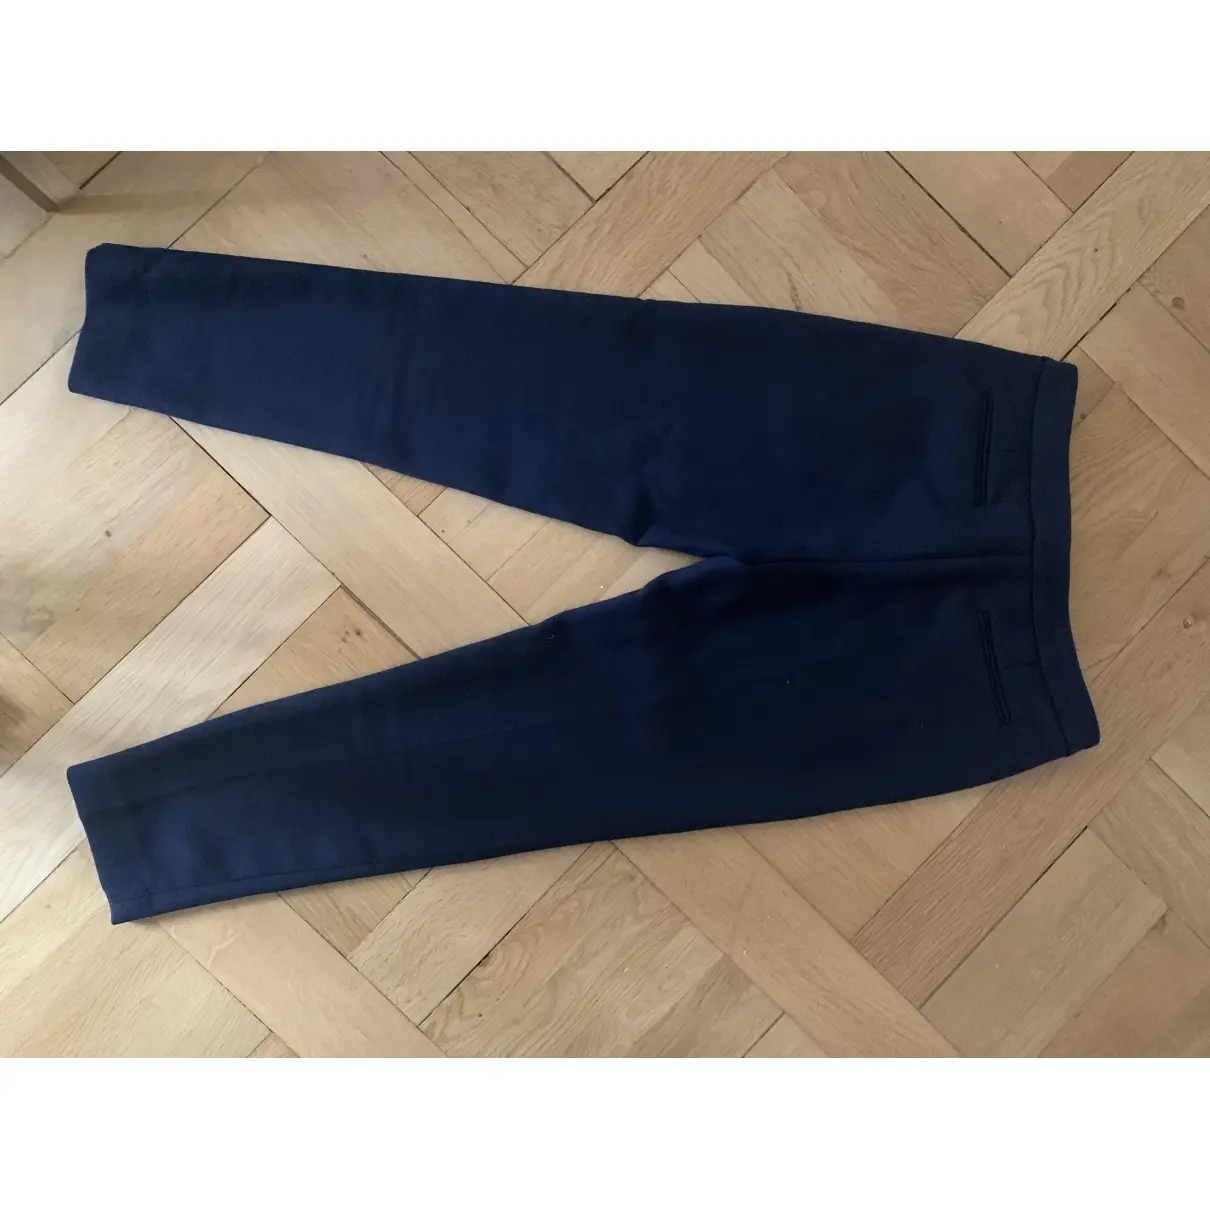 Sandro Straight pants for sale